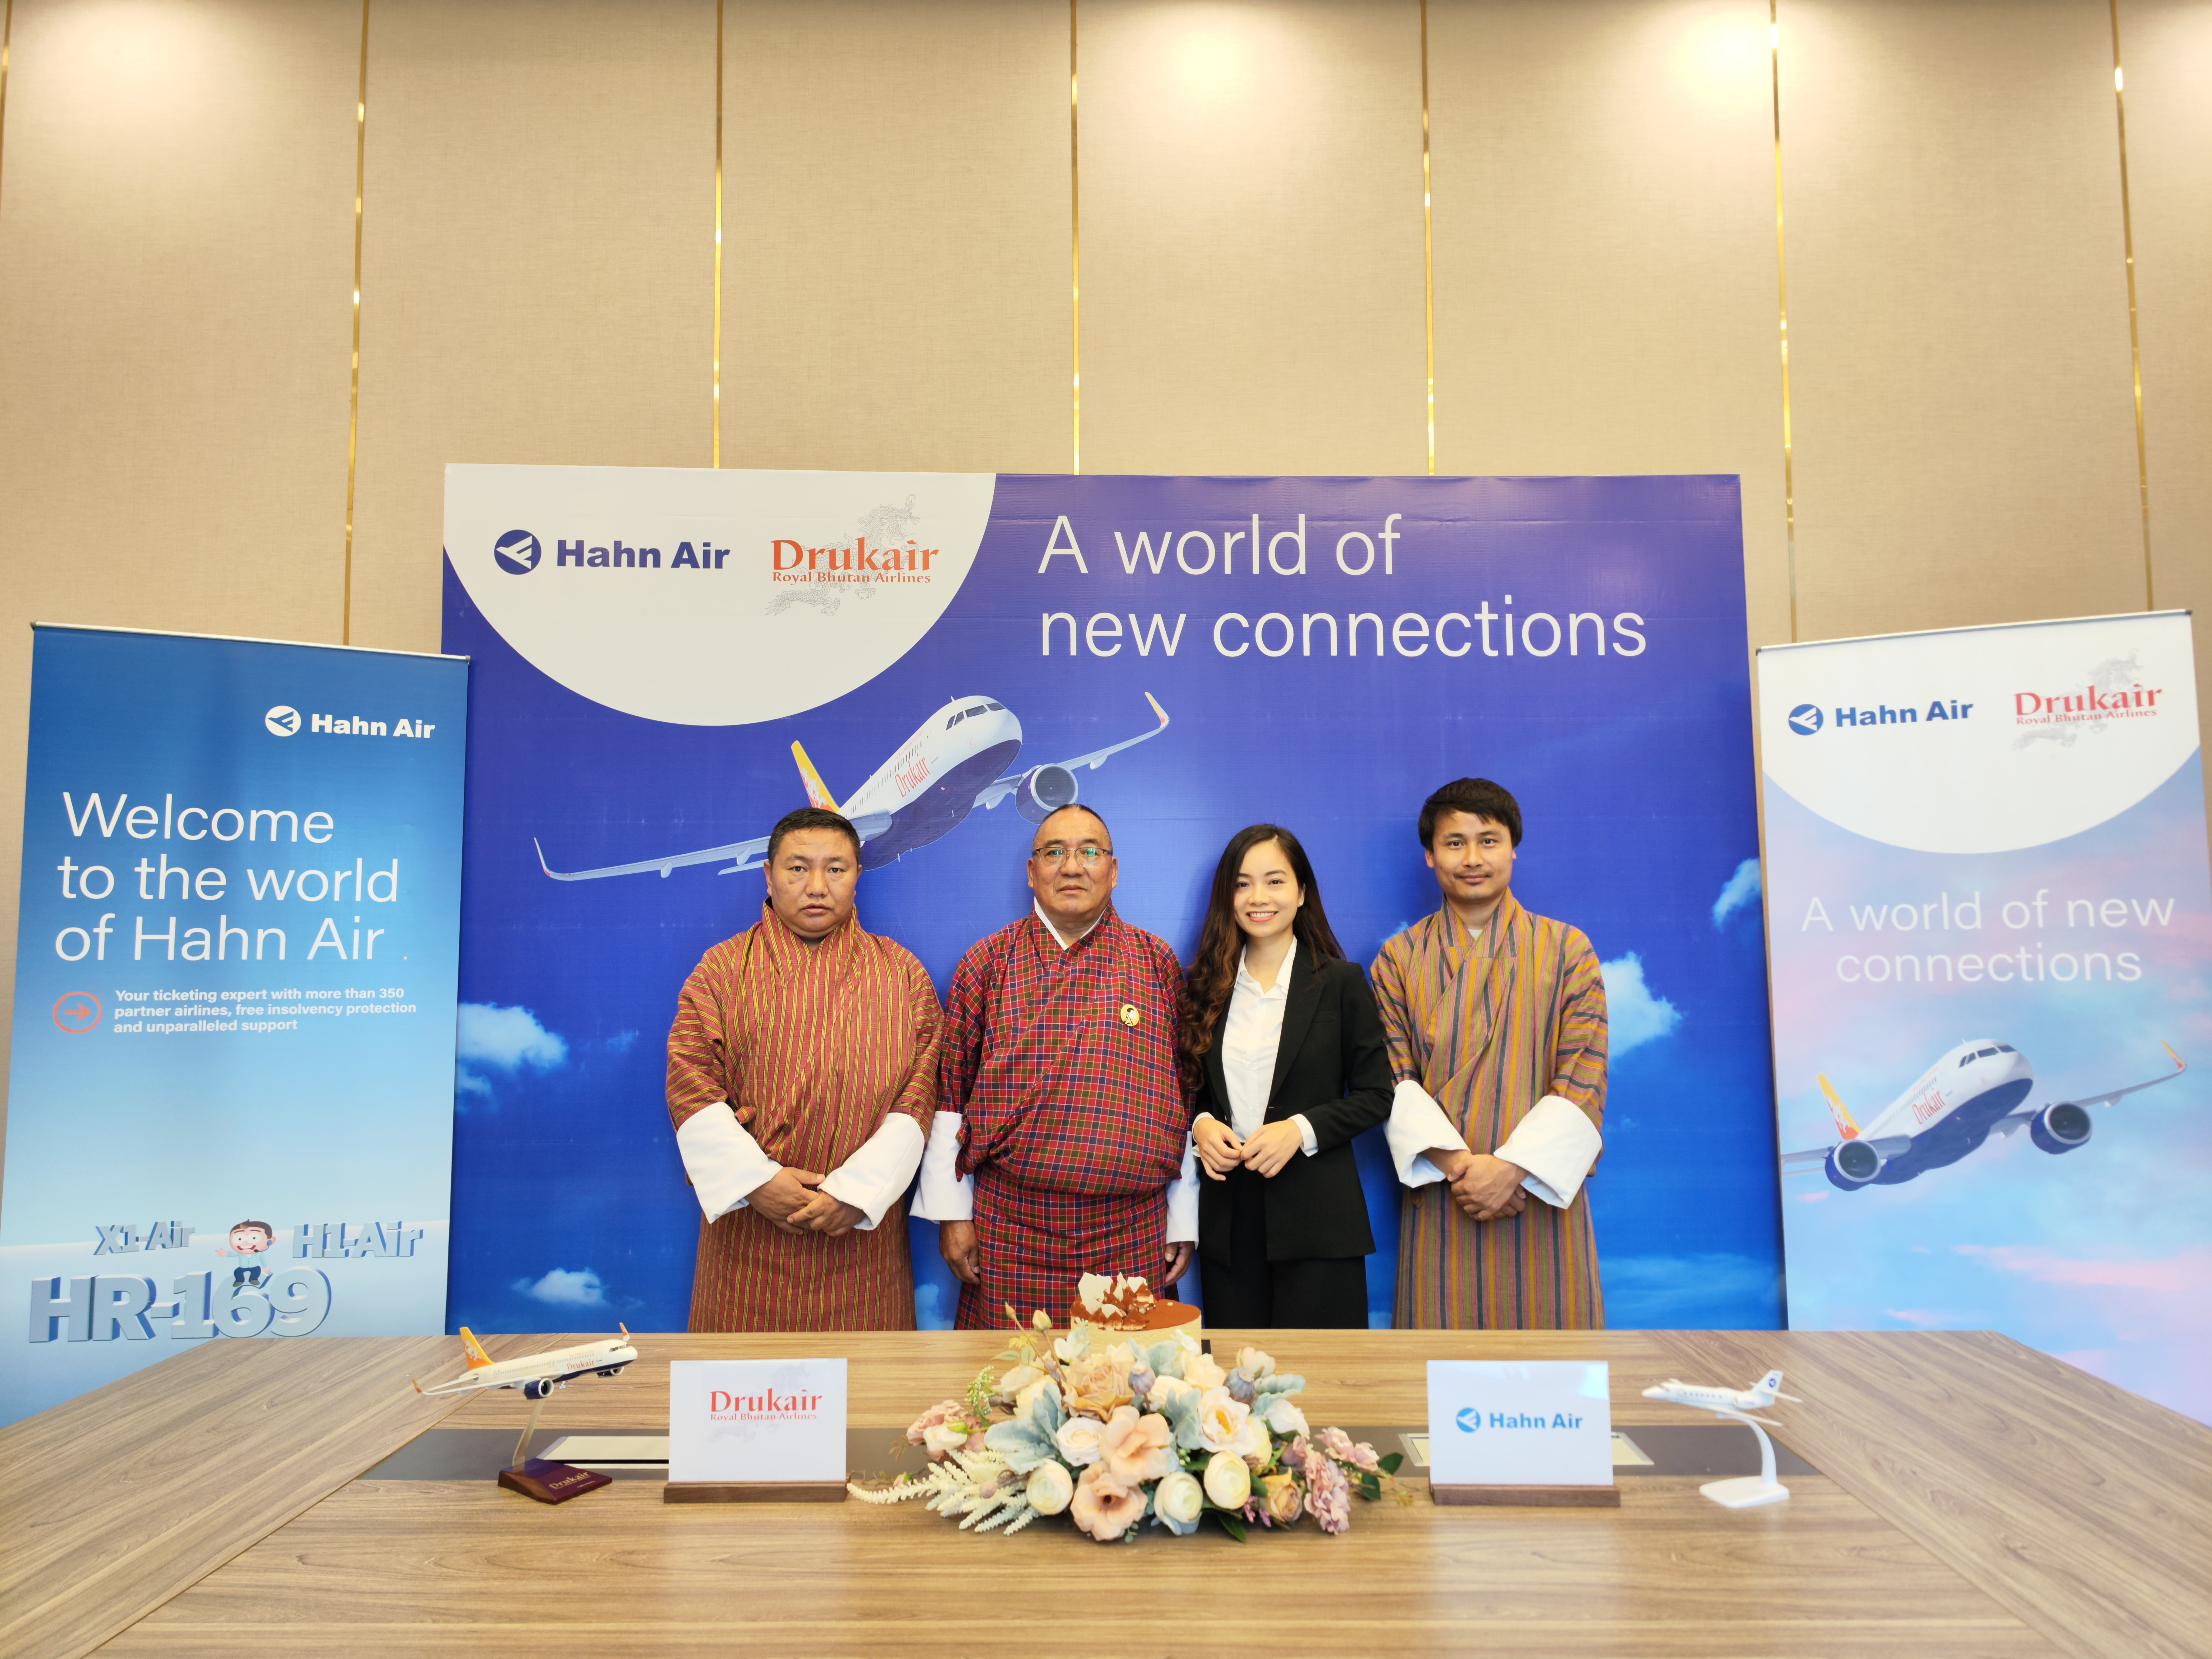 Drukair Expands its global distribution through partnership with Hahn Air.